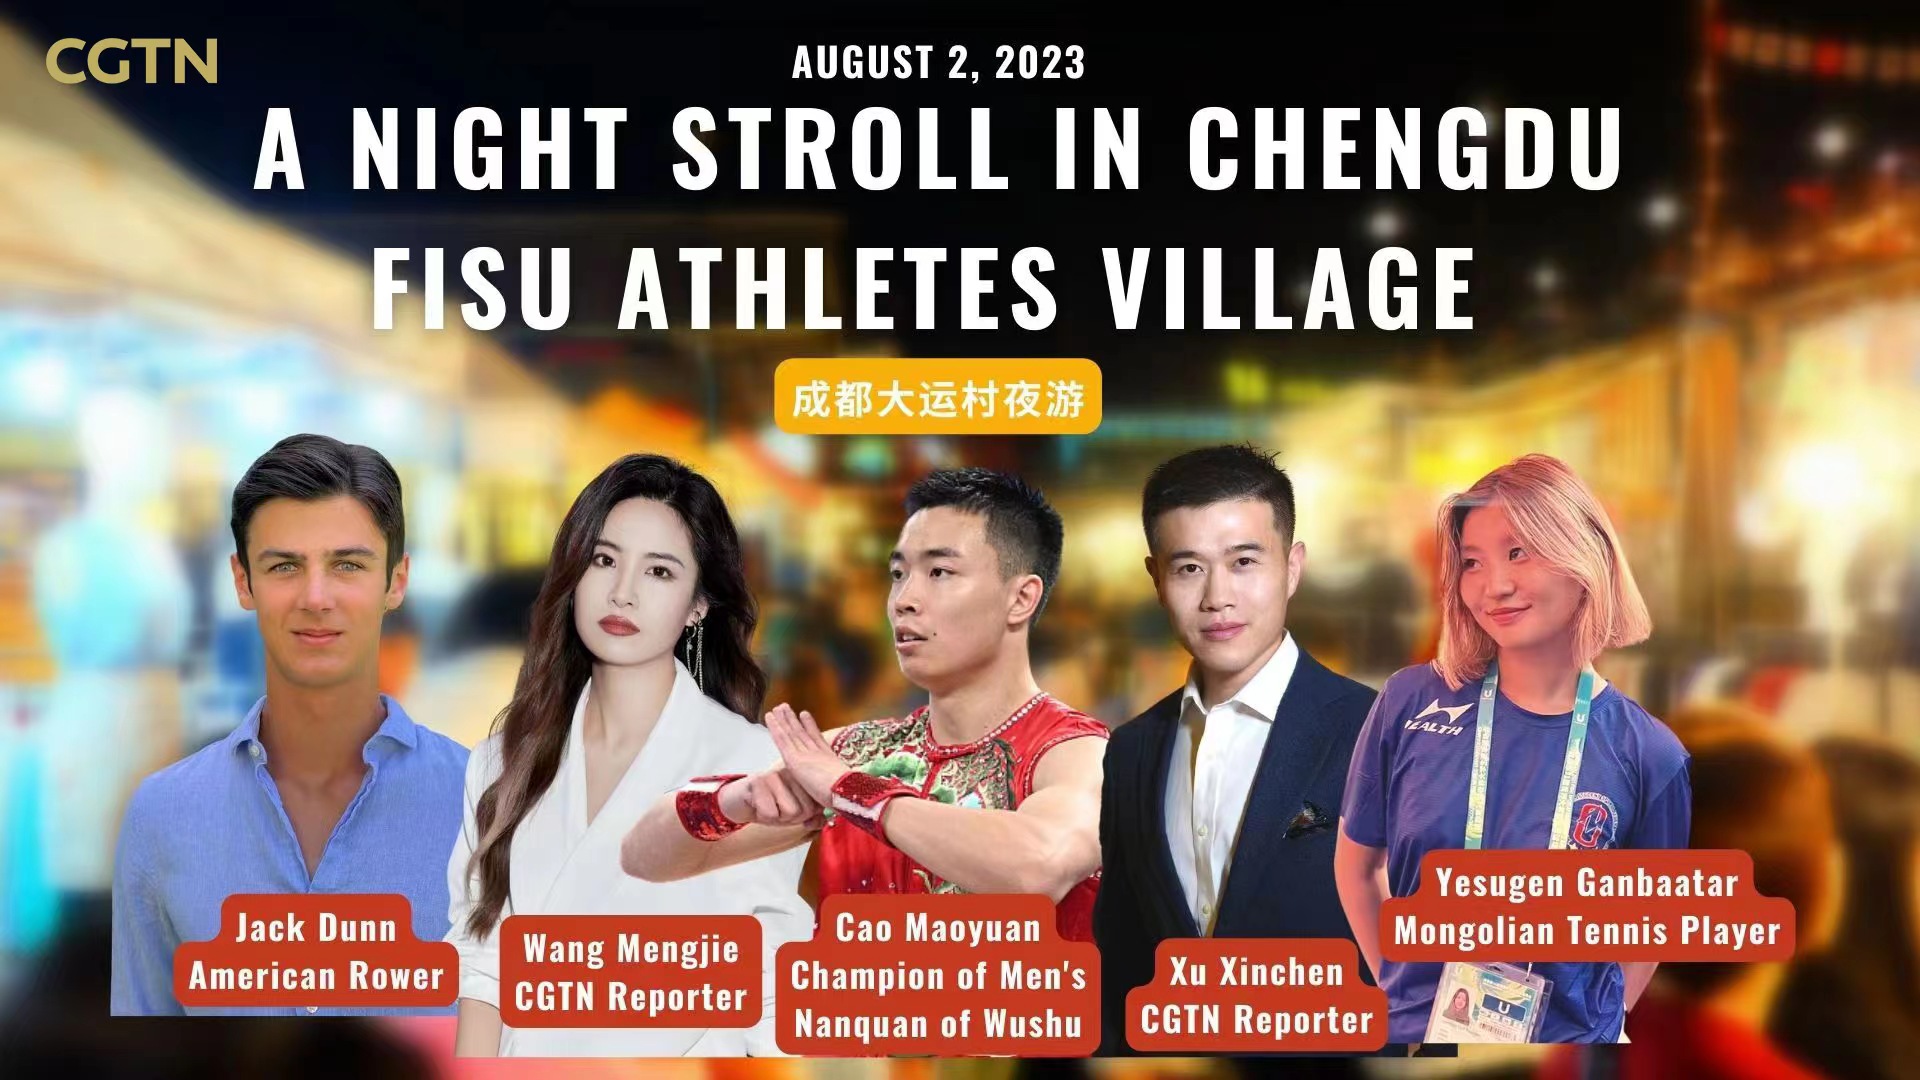 Live Night strolling in the FISU Games athletes village in Chengdu